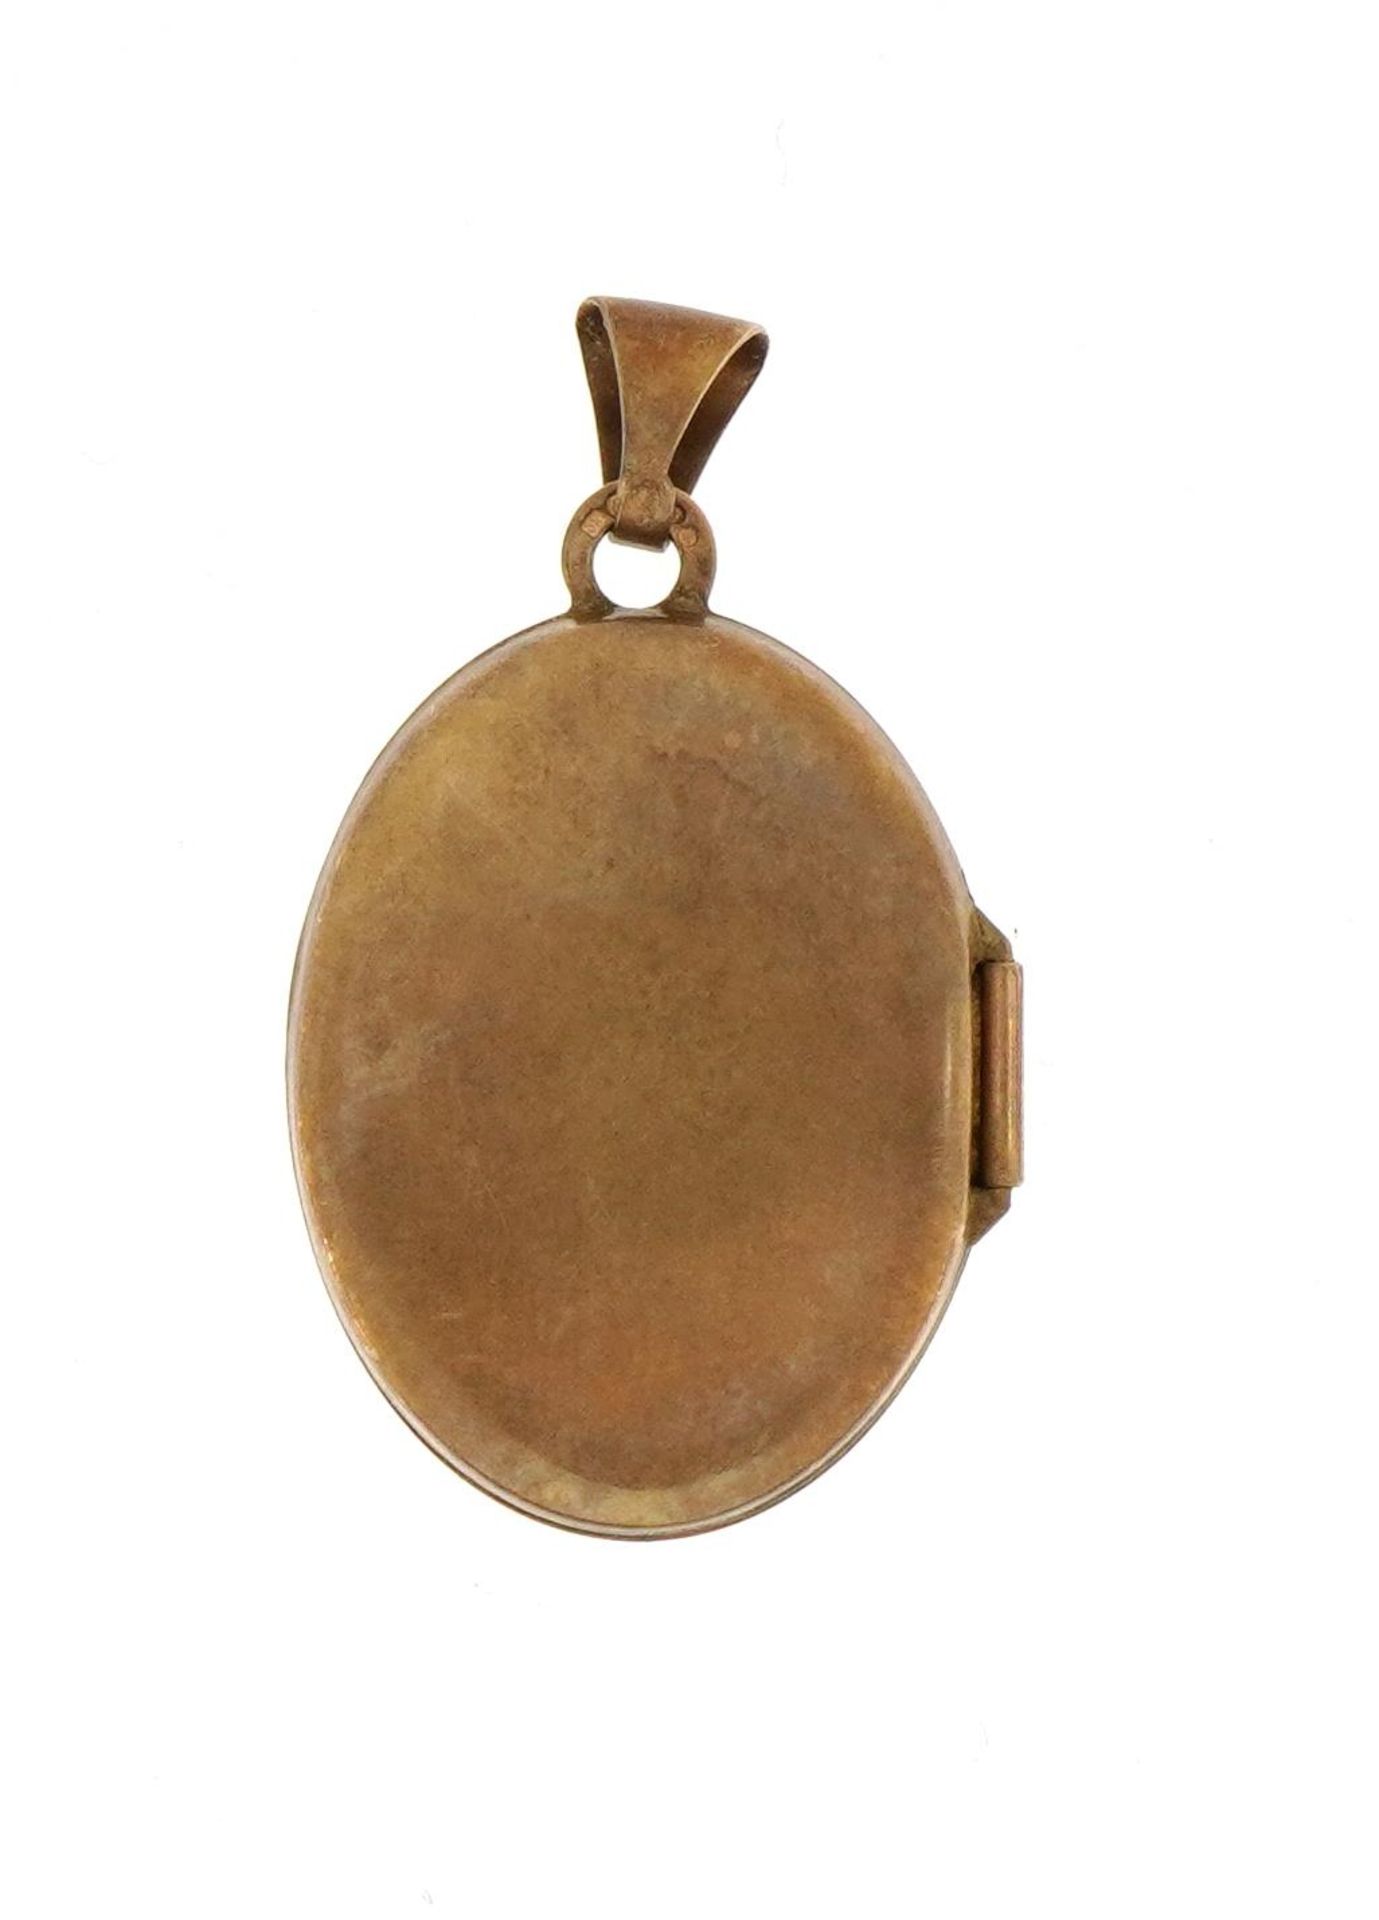 9ct gold oval locket engraved Mum, 2.7cm high, 1.9g - Image 3 of 3